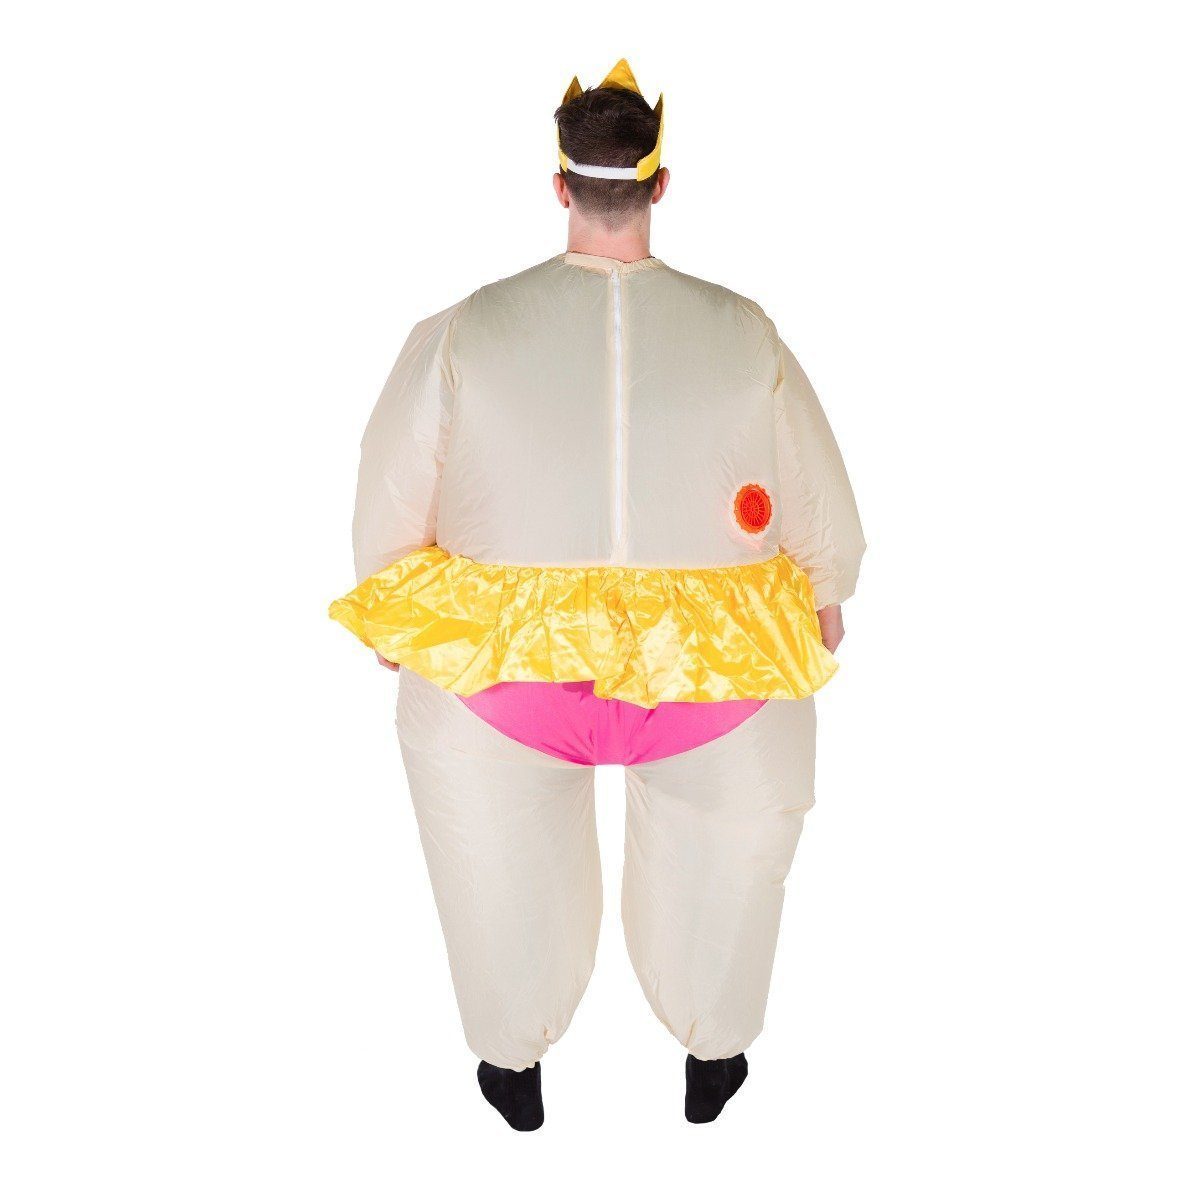 Fancy Dress - Inflatable Ballerina Costume